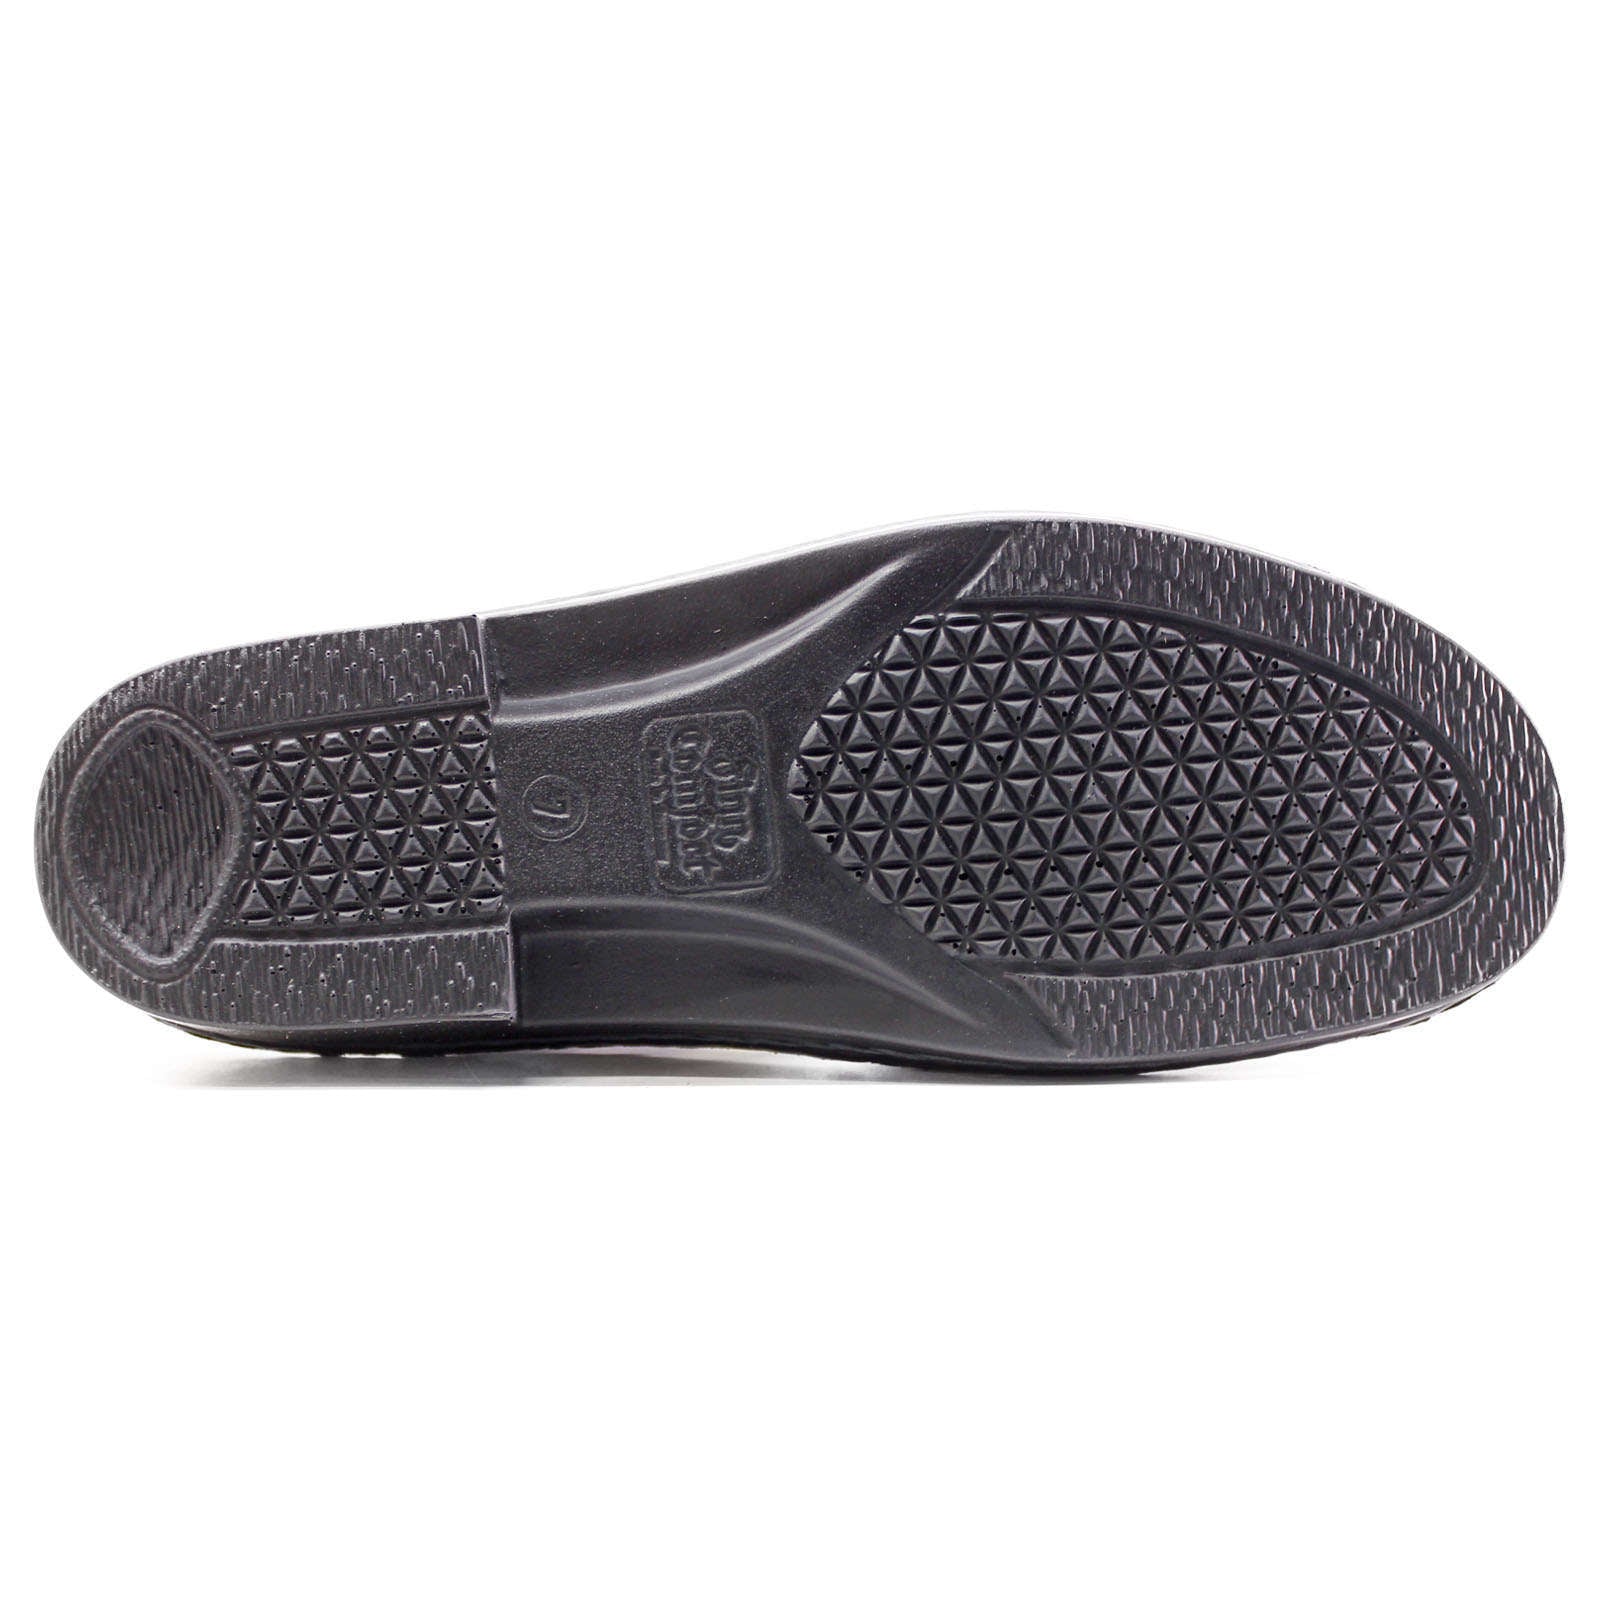 Finn Comfort Costa Nubuck Leather Women's Sandals#color_black